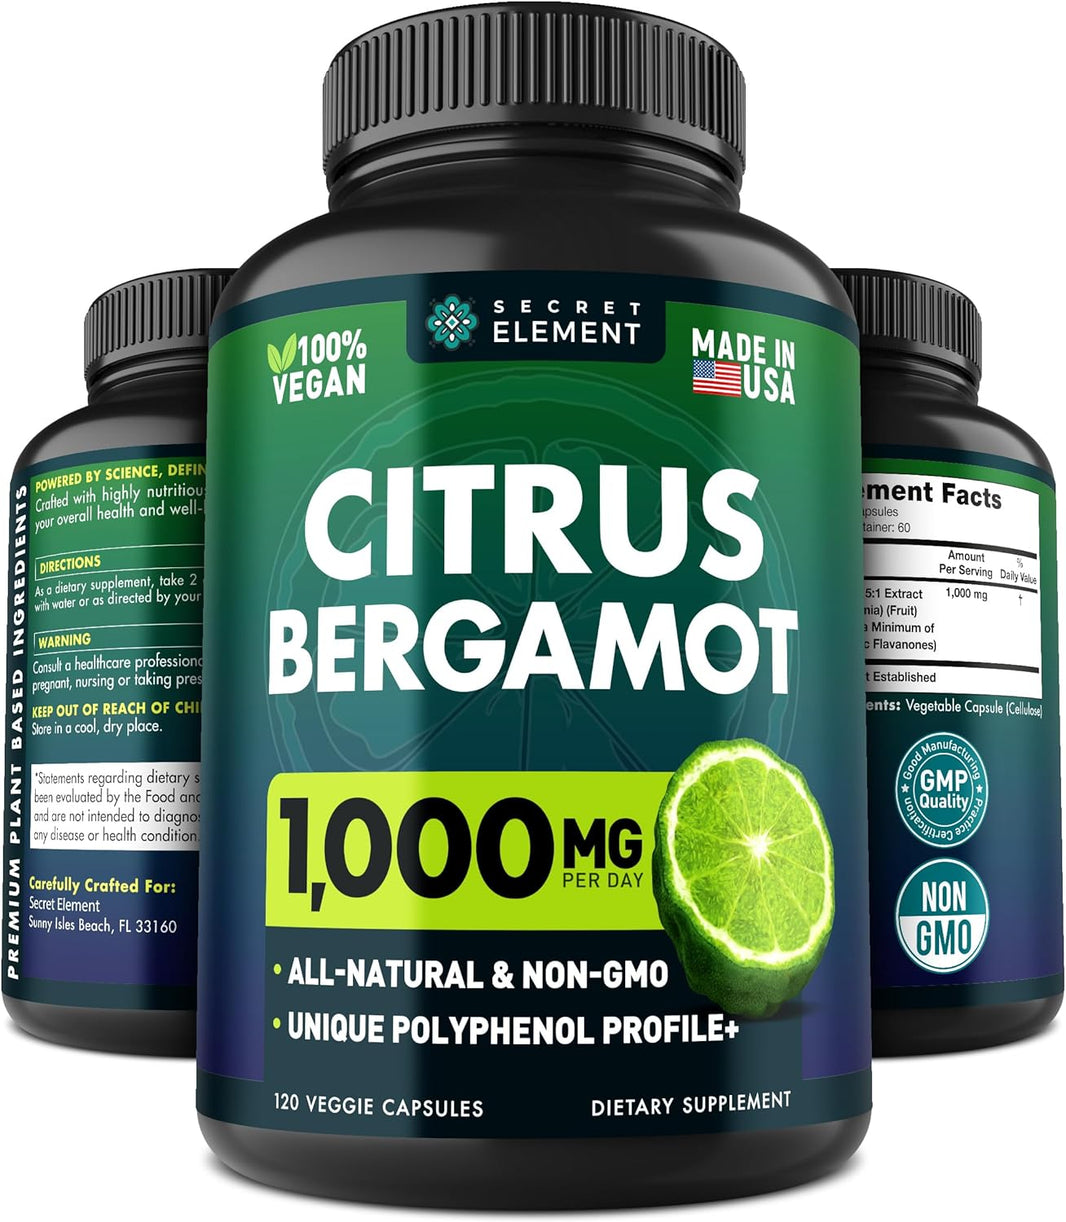 Secret Element Citrus Bergamot Extract 1000mg - Organic Citrus Bergamot Supplement for Heart, Immune System Support, and Healthy Aging - Pure, Vegan Bergamot Capsules